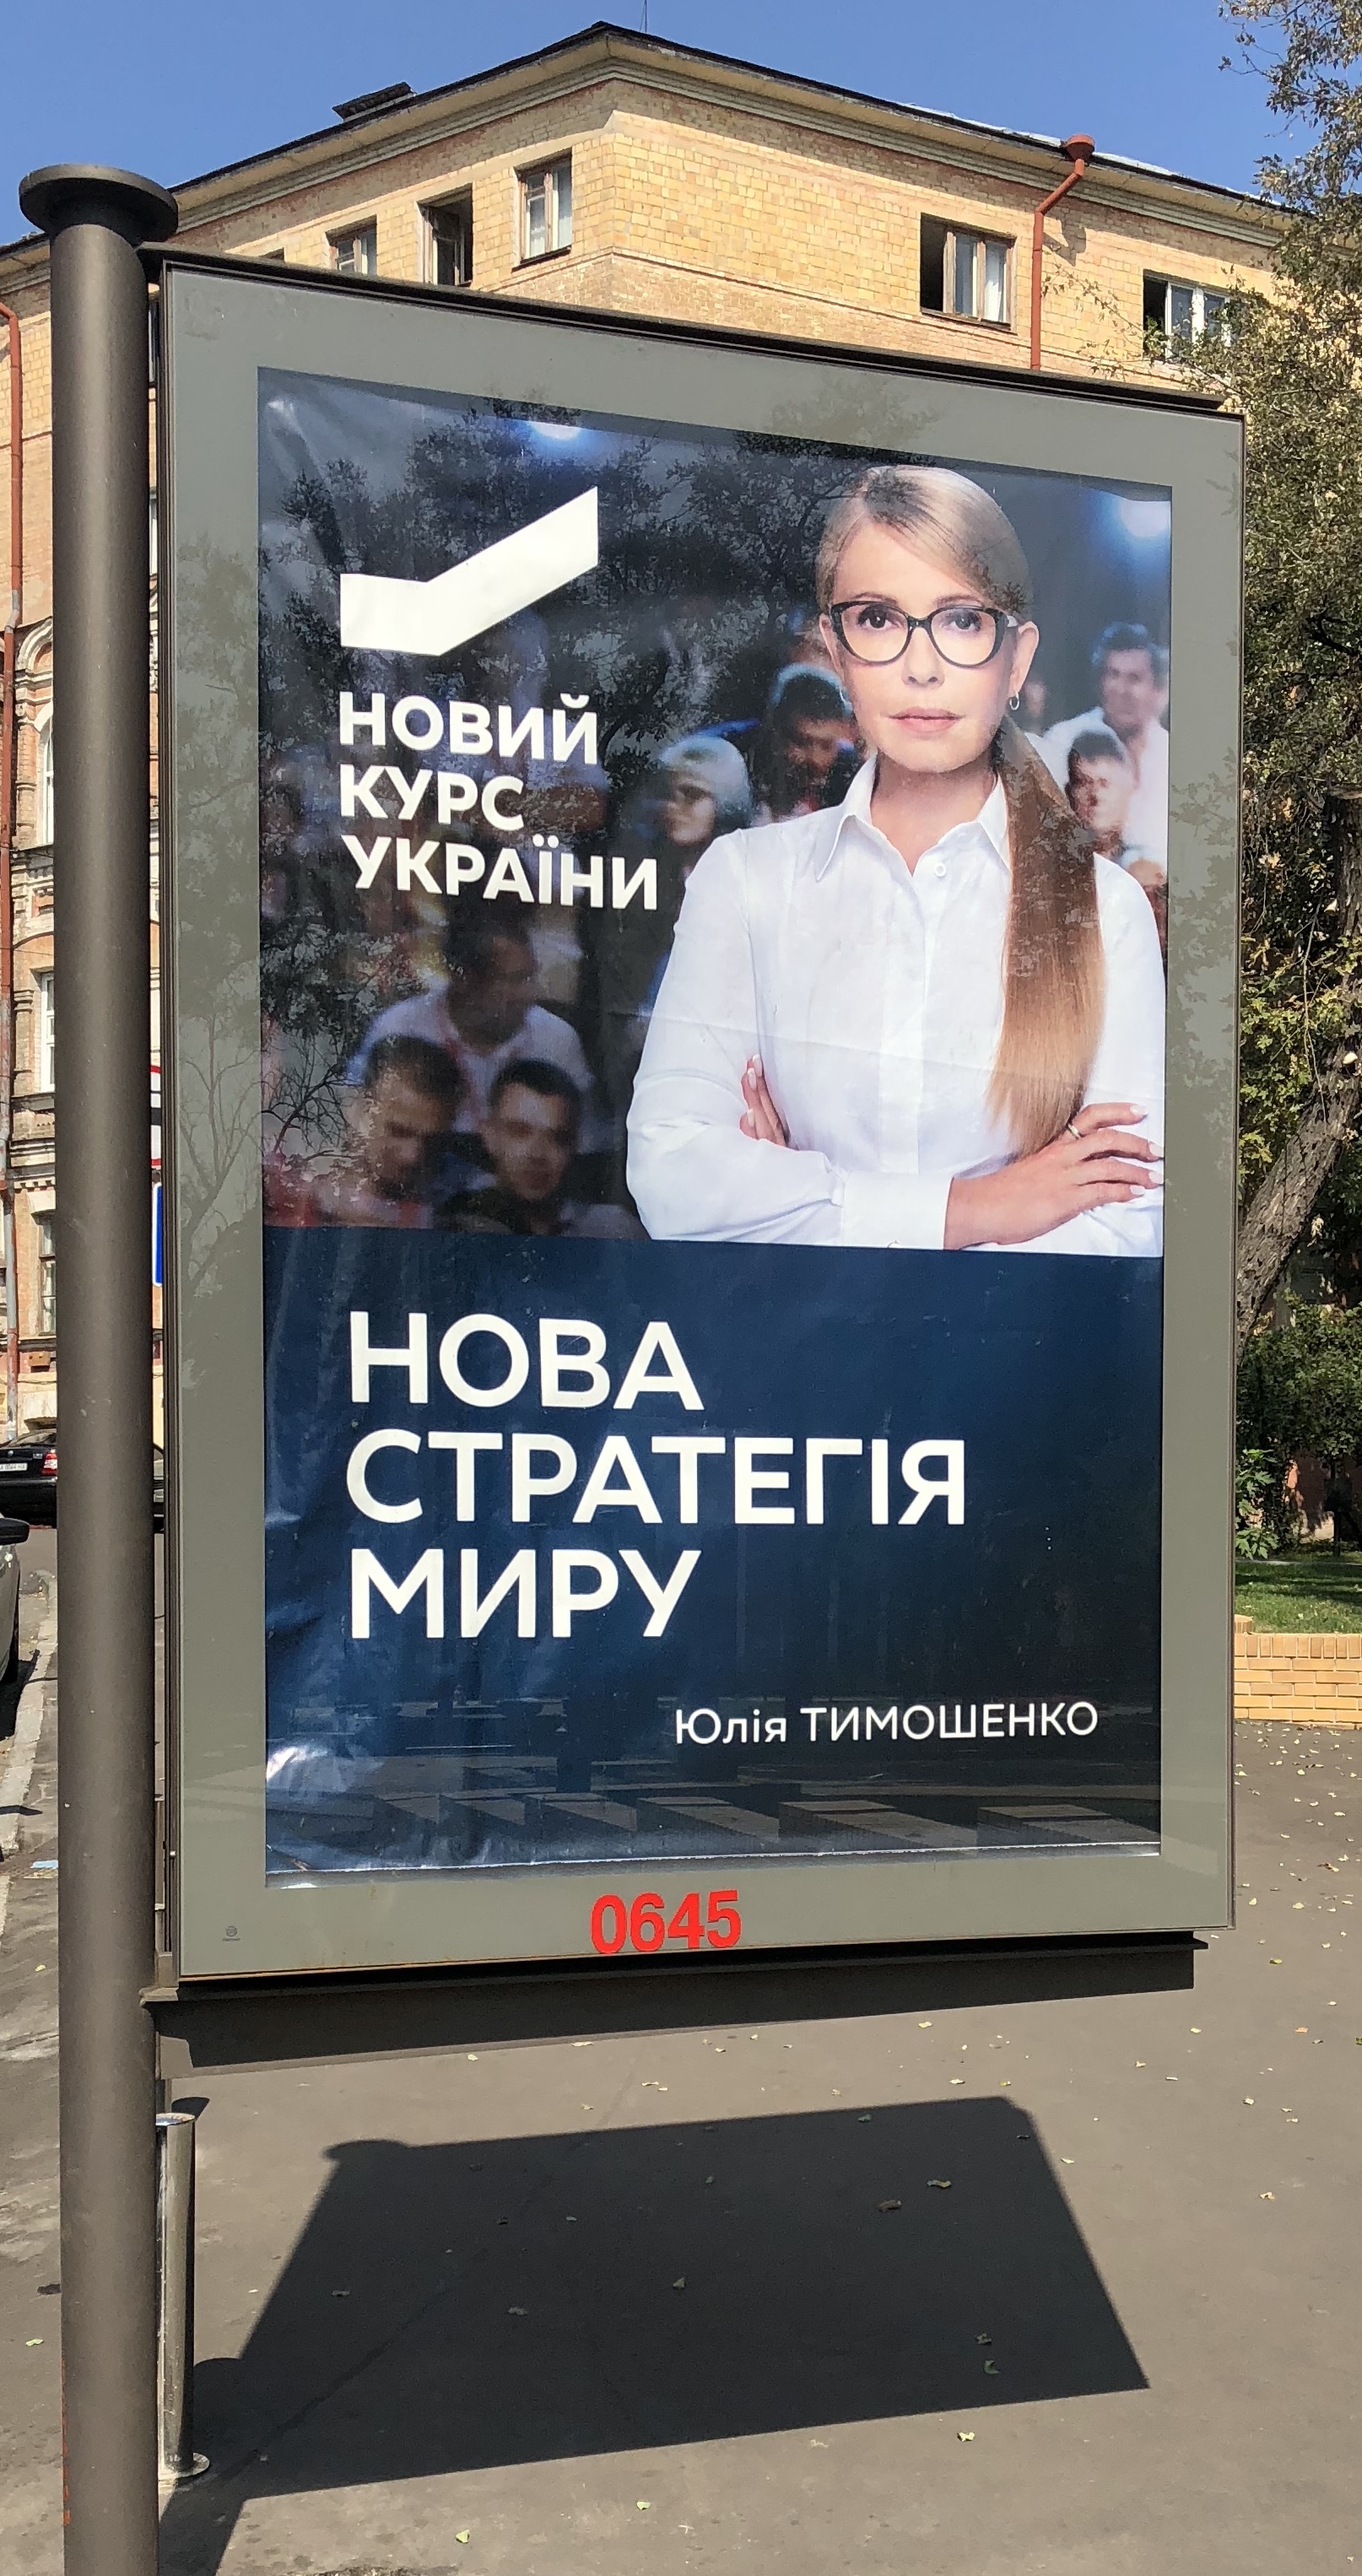 2018 billboard for Tymoshenko in Kiev. (Wikimedia Commons)